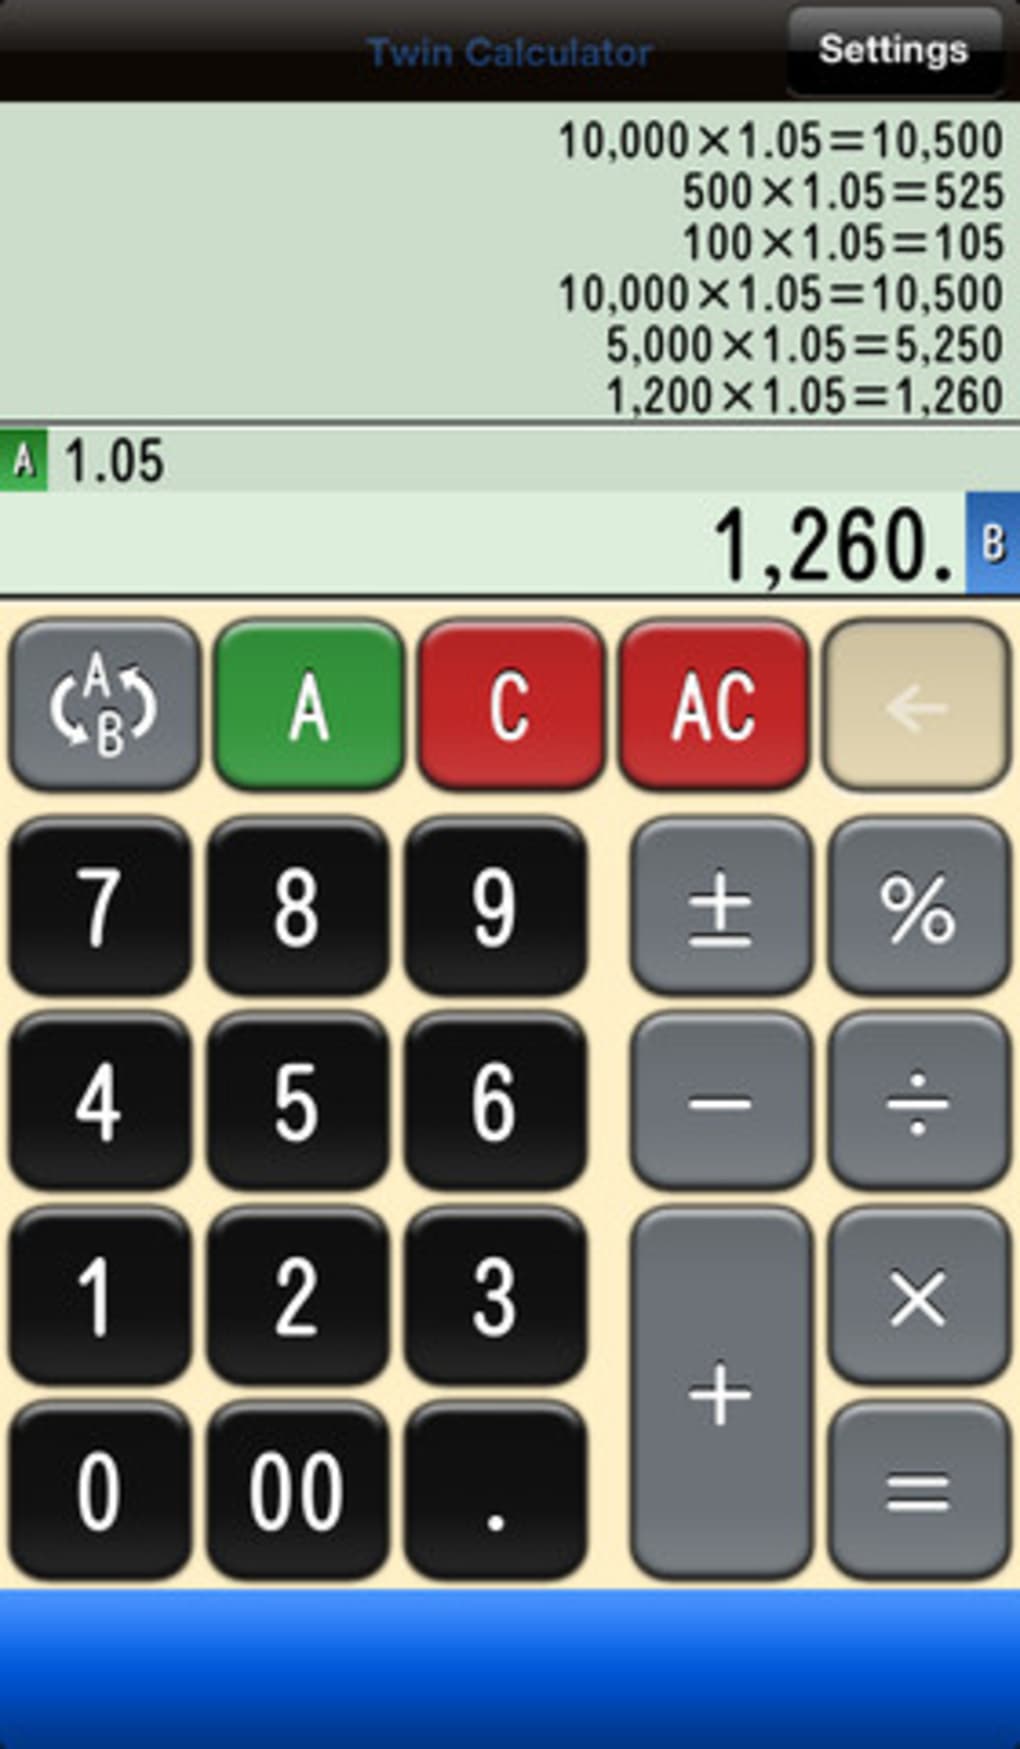 Twin電卓 Twin Calculator ツイン電卓 For Iphone 無料 ダウンロード